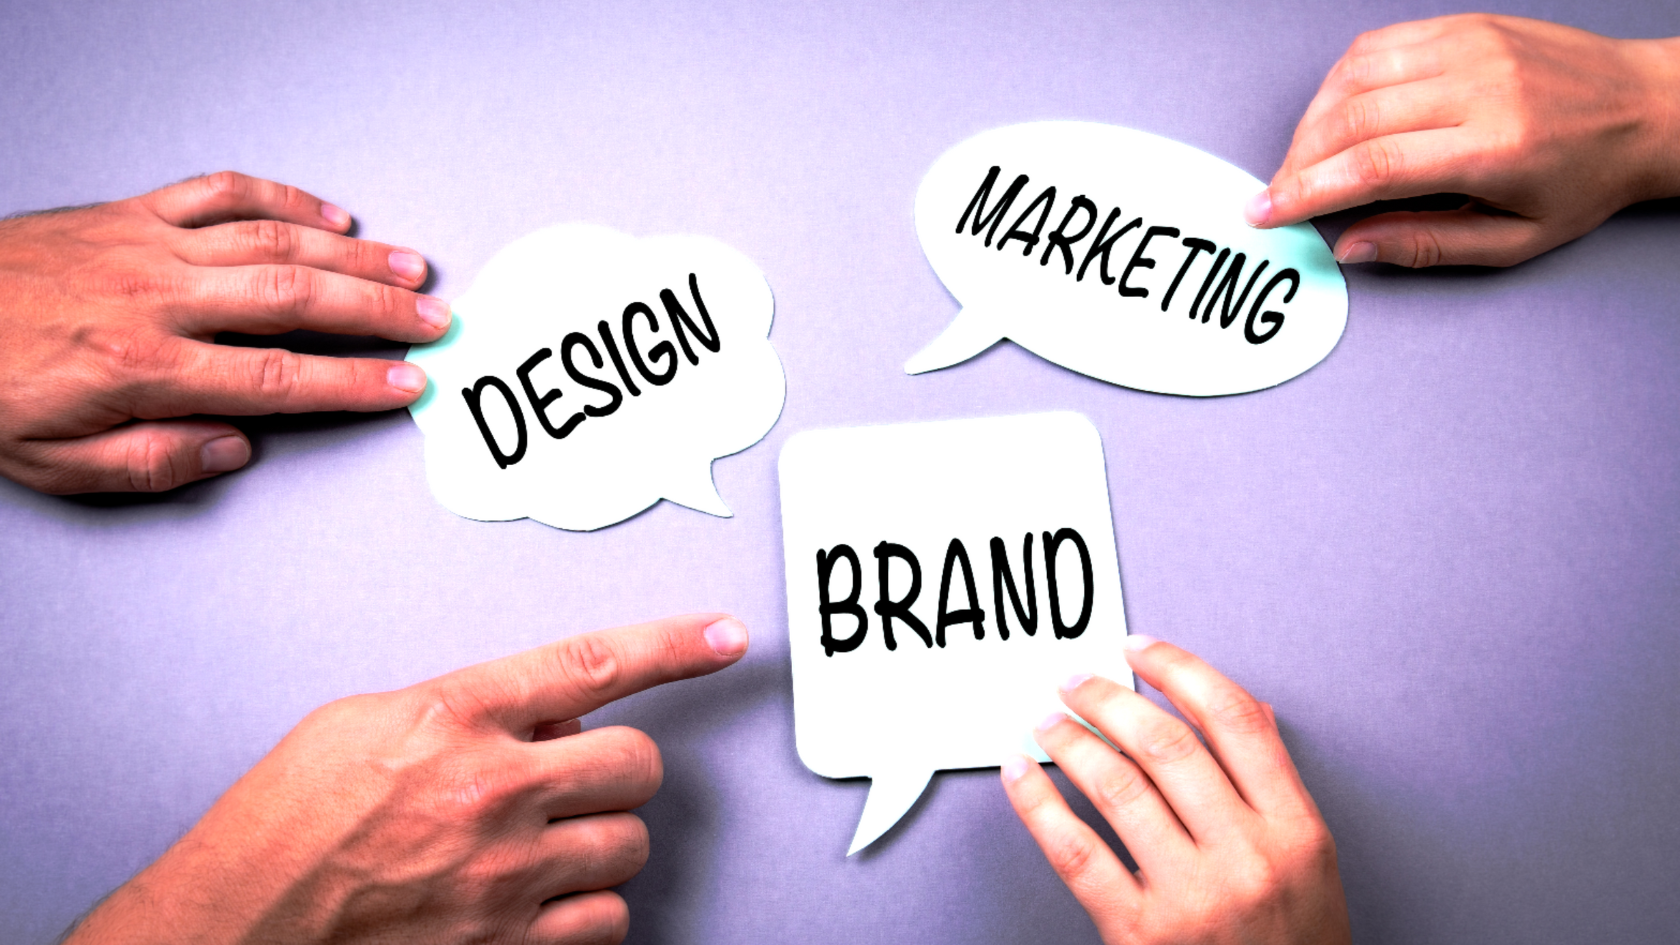 branding and social media tips